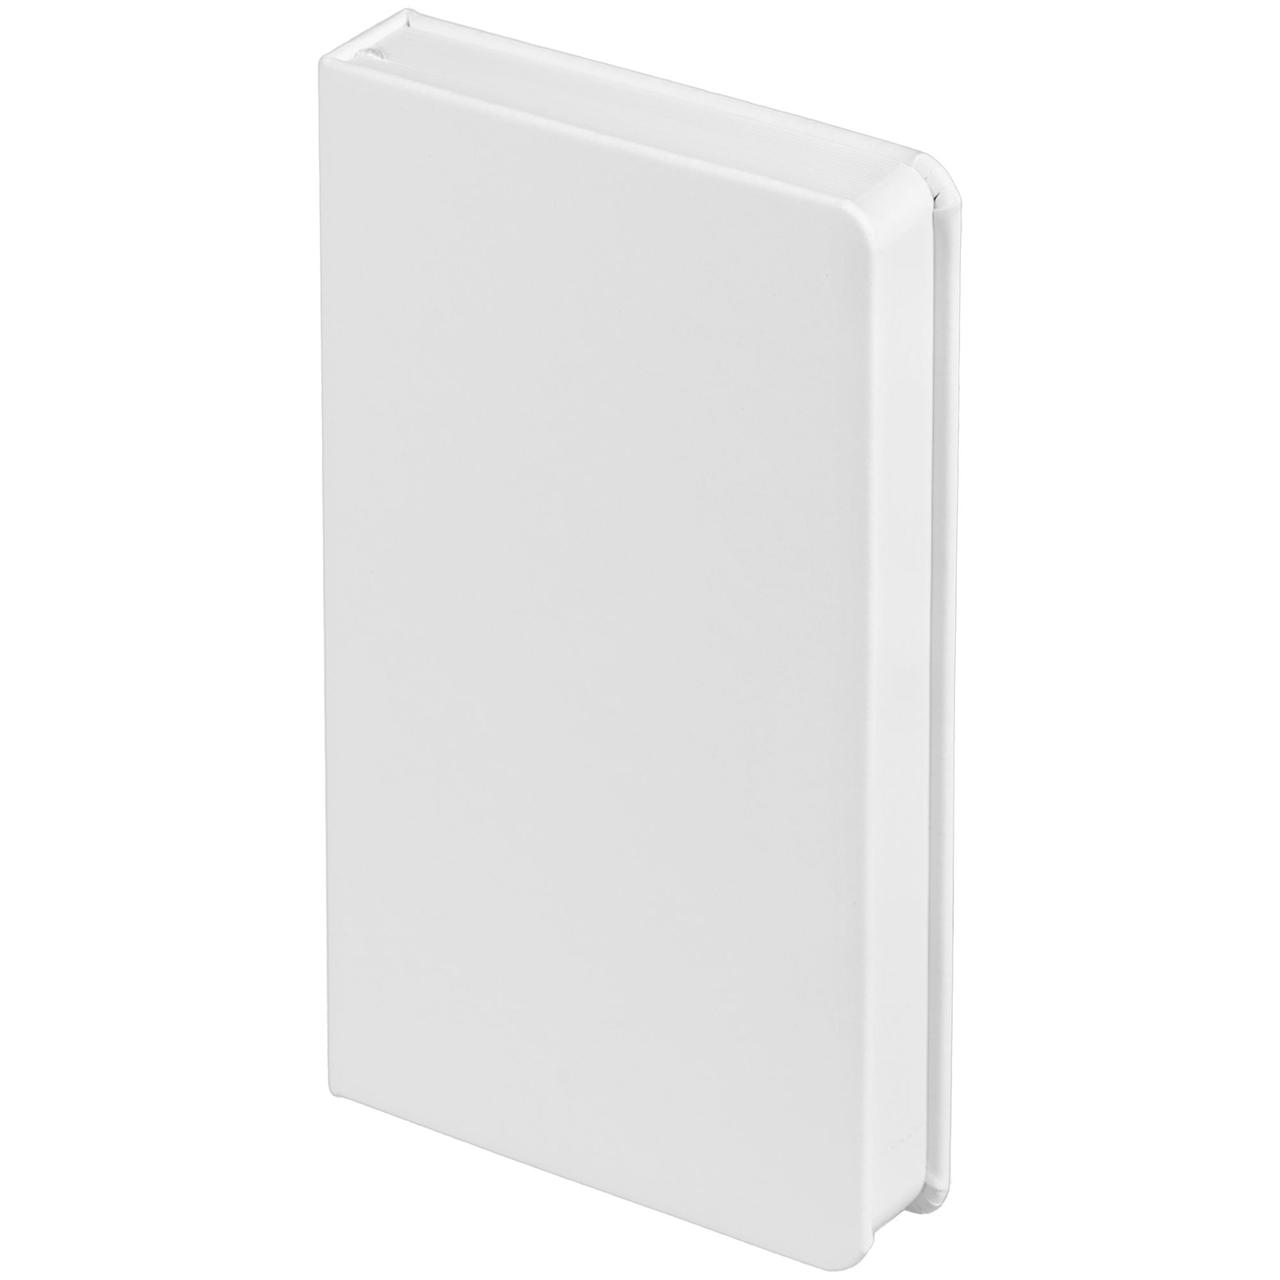 Ежедневник Basis Mini ver.2, недатированный, белый (артикул 2840.06), фото 1